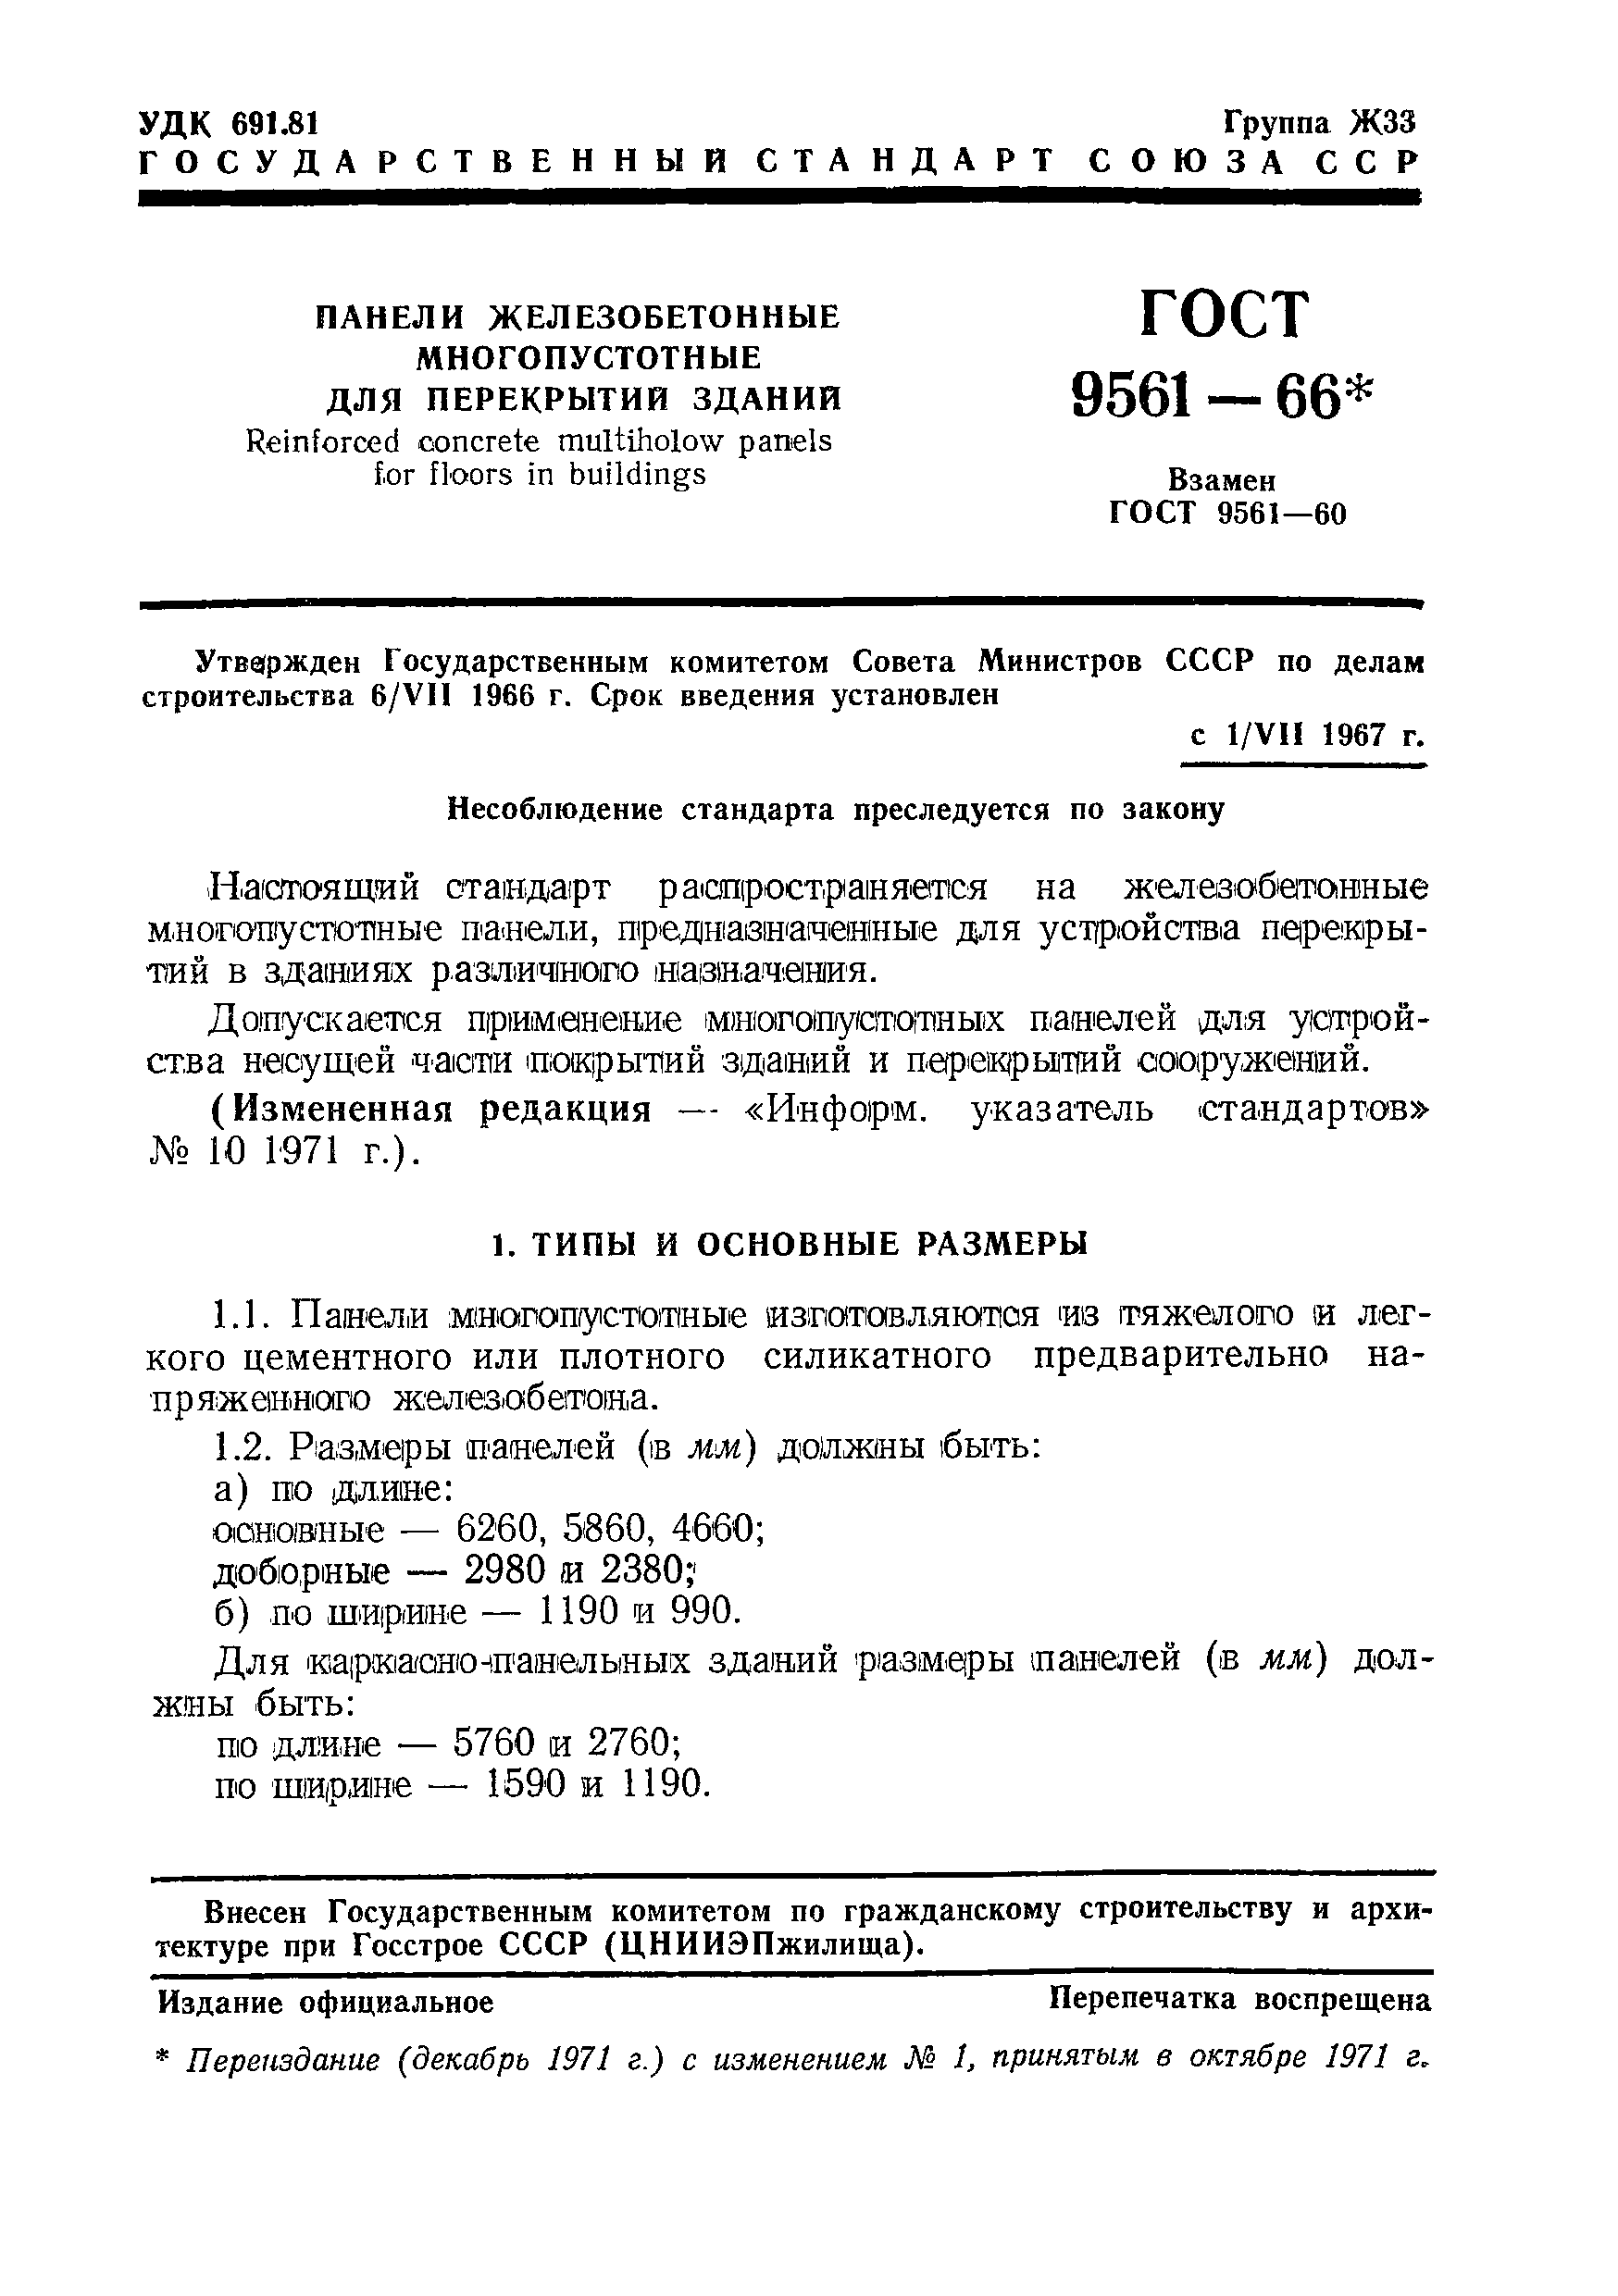 ГОСТ 9561-66